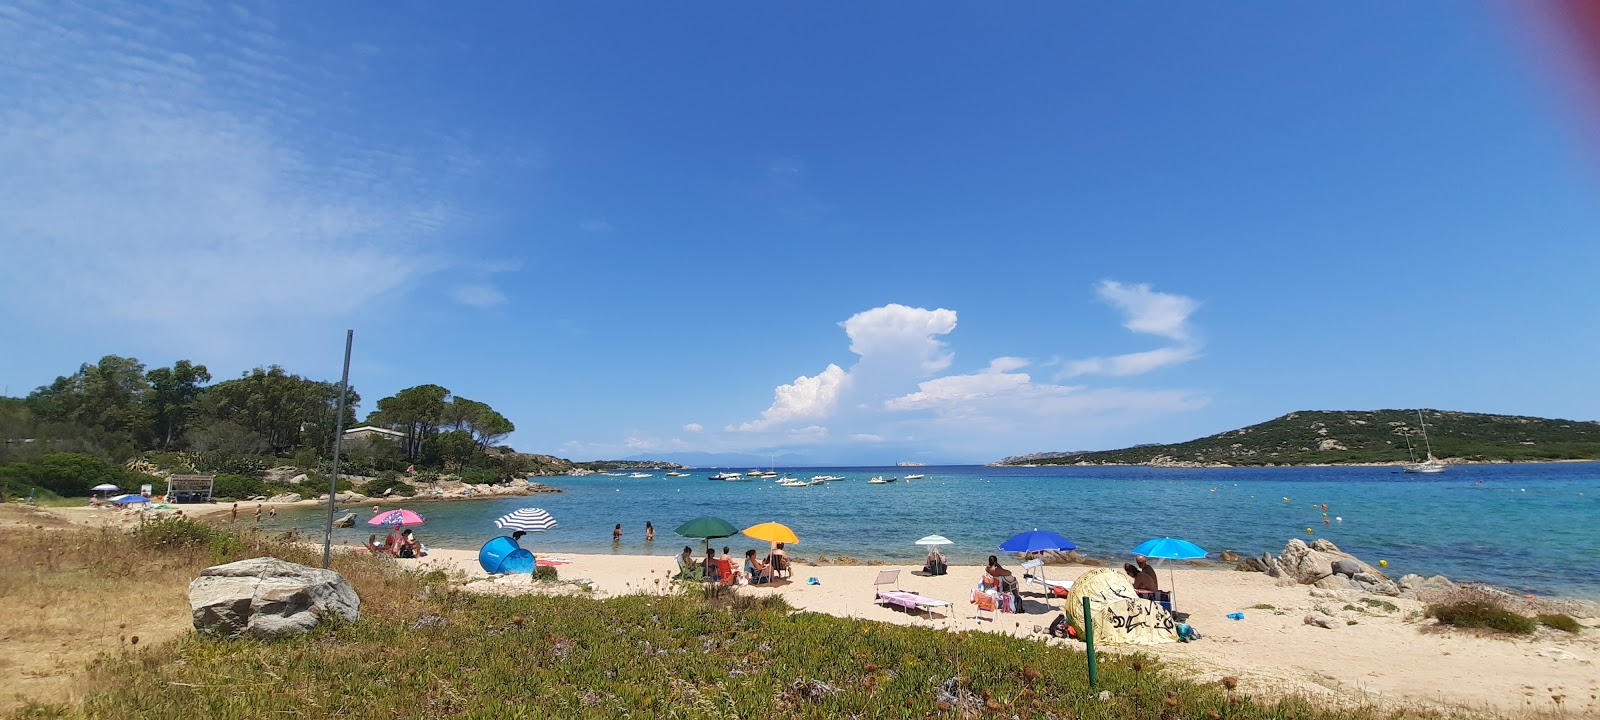 Foto von Spiaggia Angolo Azzurro mit heller sand Oberfläche